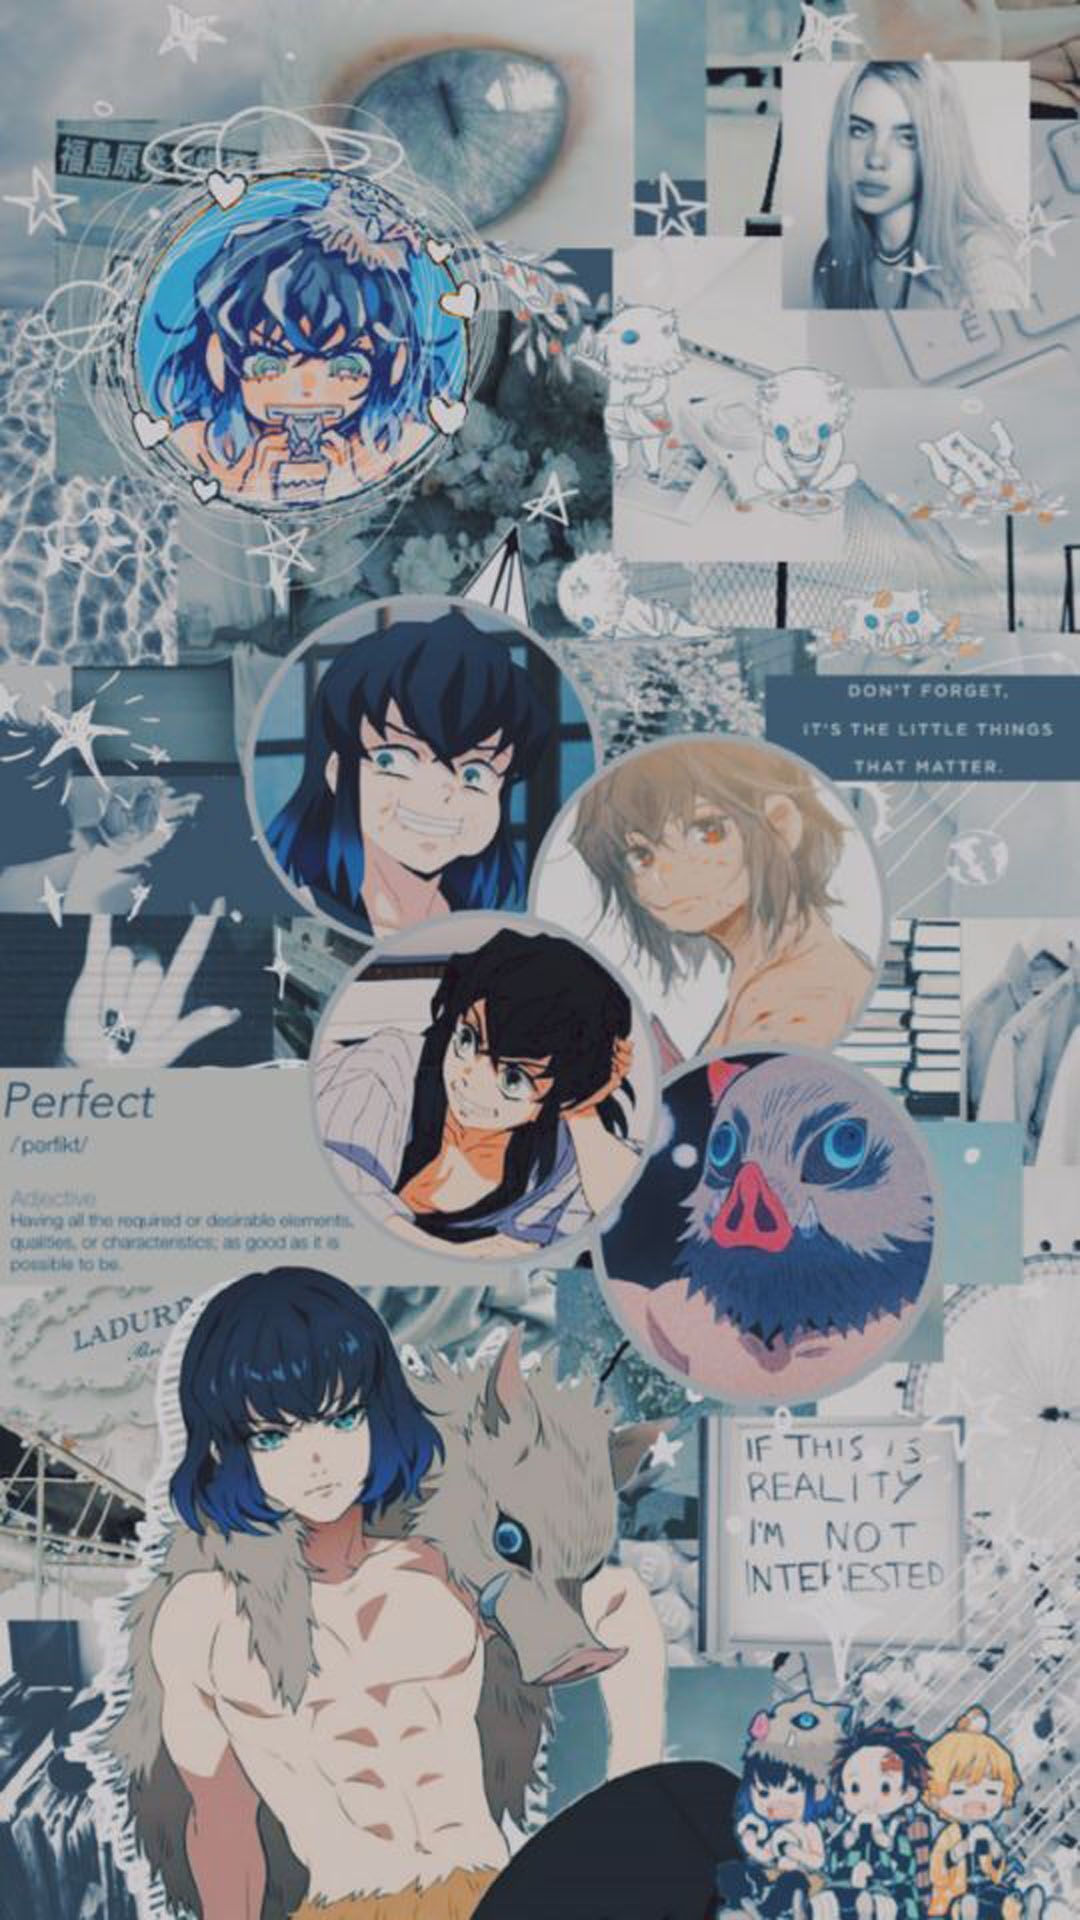 Inosuke Hashibira. Cute anime wallpaper, Anime wallpaper, Cool anime wallpaper